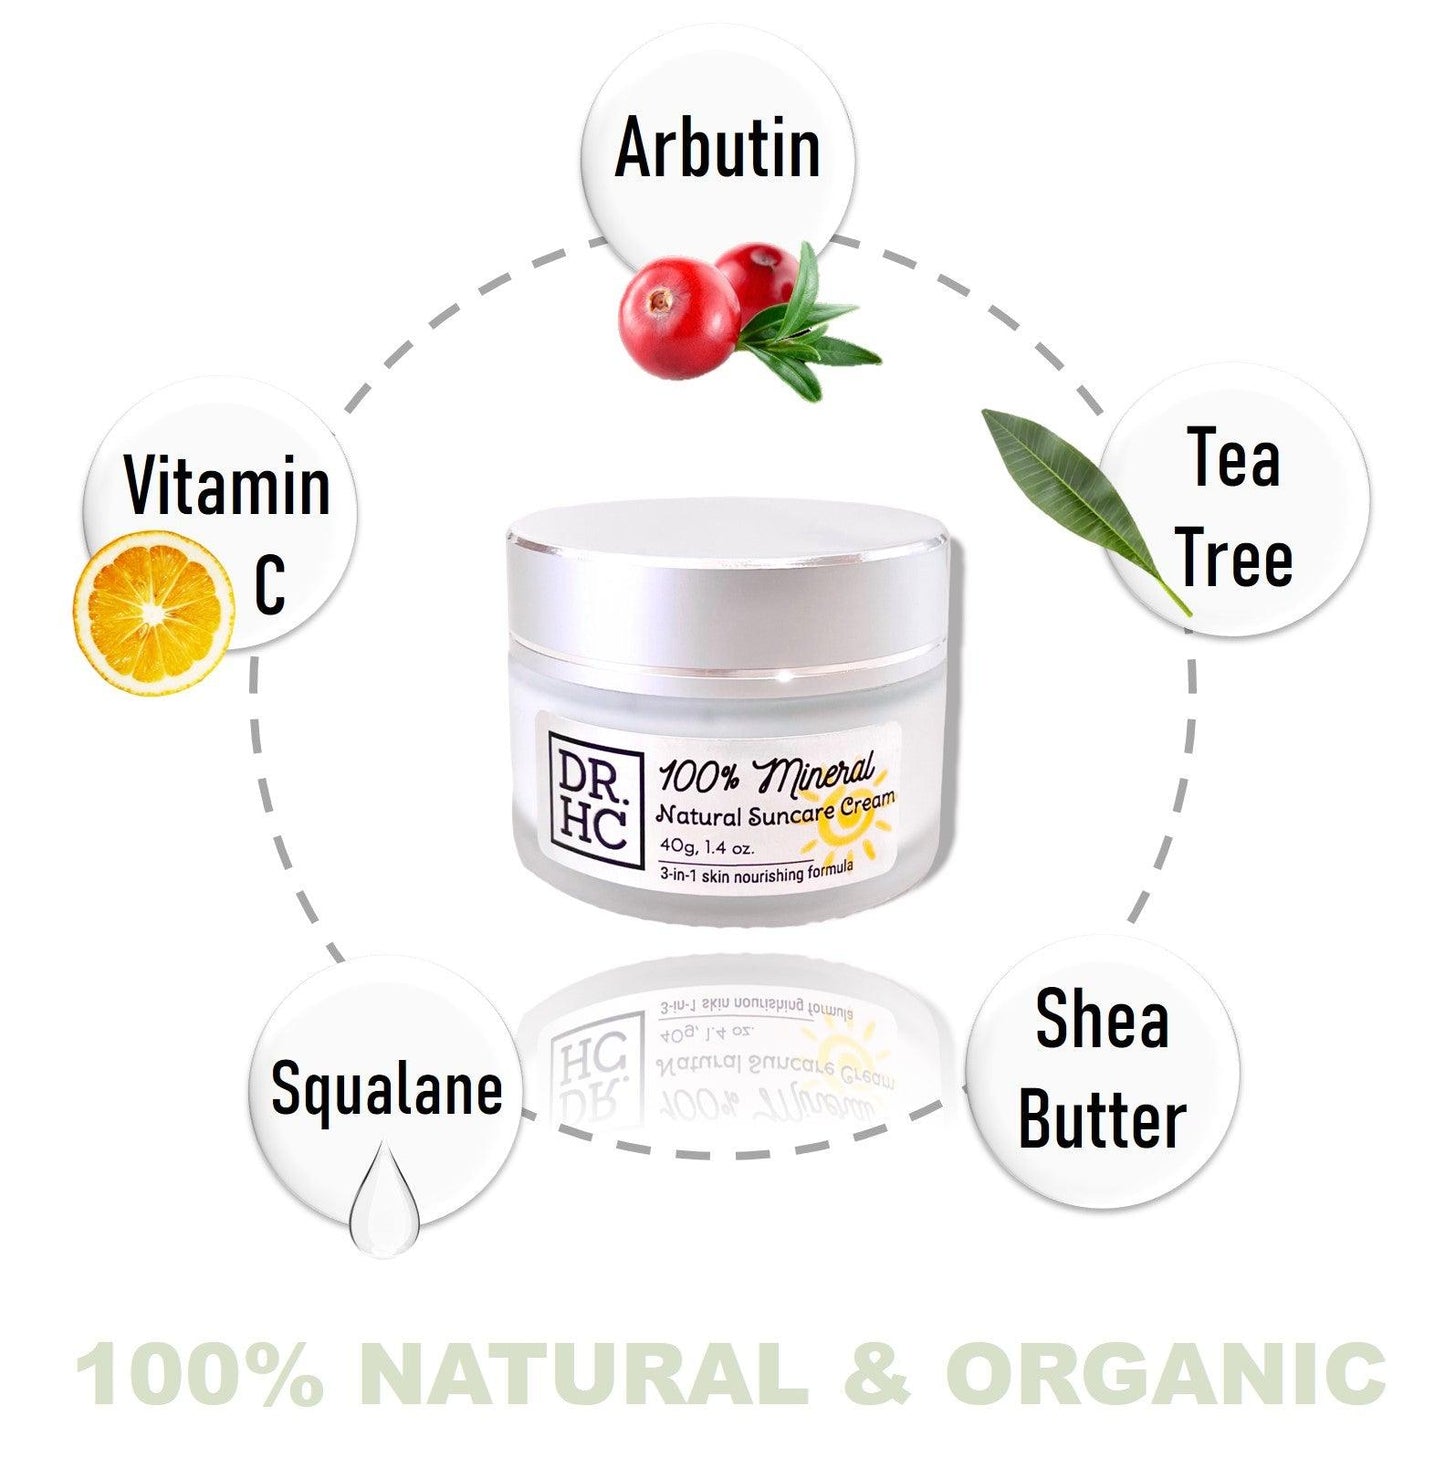 DR.HC 100% Mineral Natural Suncare Cream (40g, 1.4oz.) (Natural UV Care, Skin brightening, Anti-aging, Damage Repair, Anti-inflammatory...)